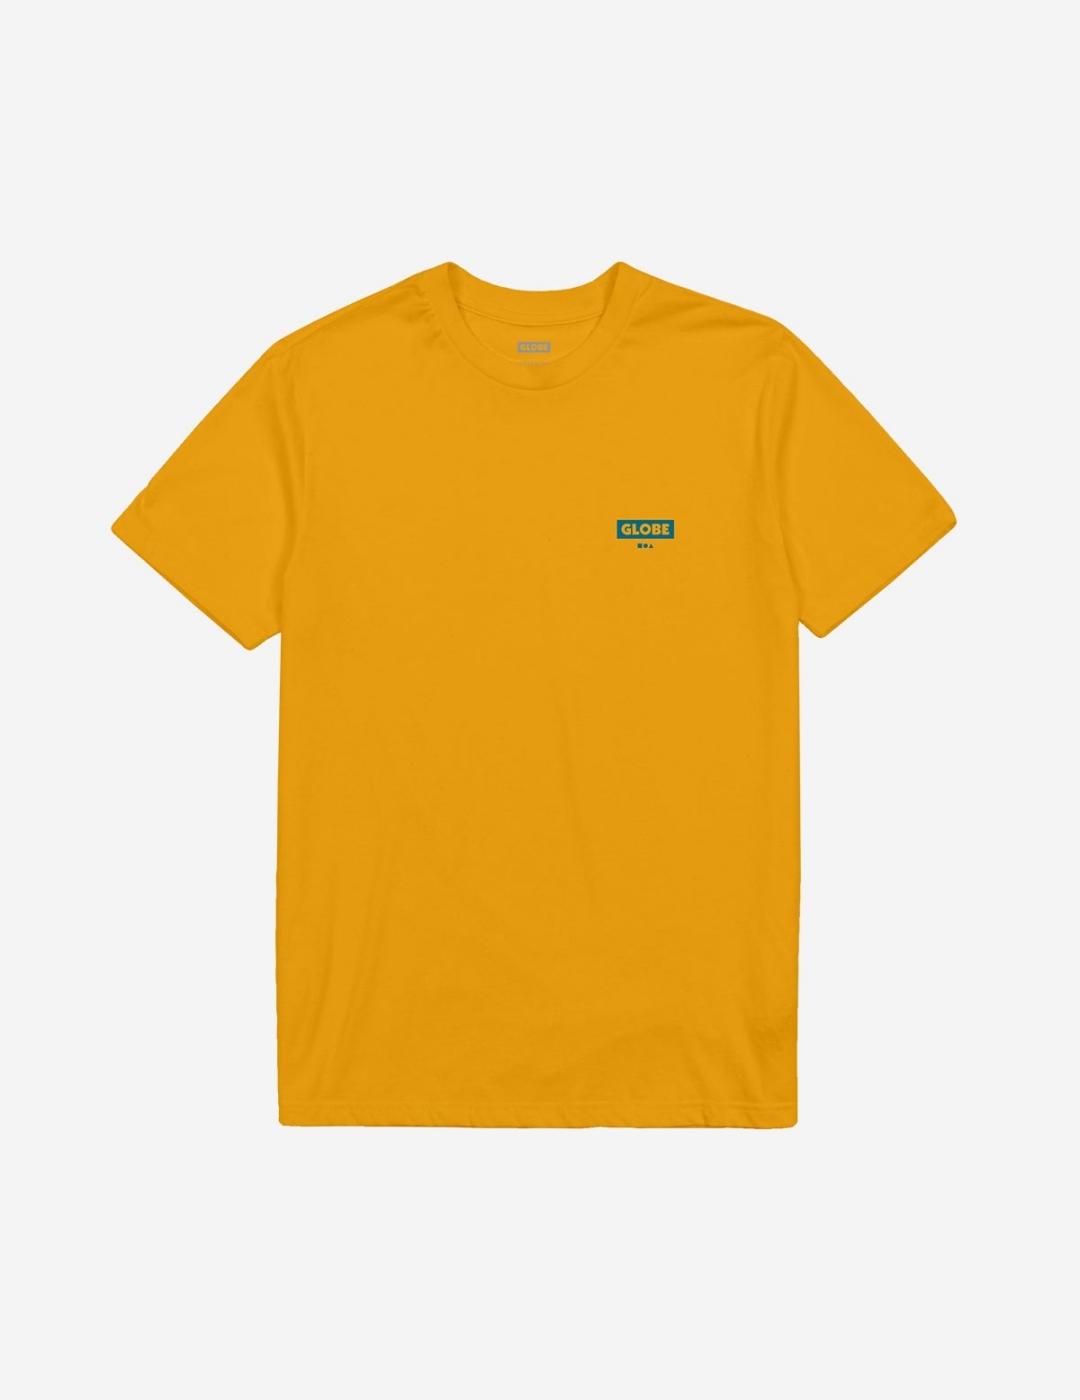 Camiseta GLOBE LIVING LOW VELOCITY - Citrus